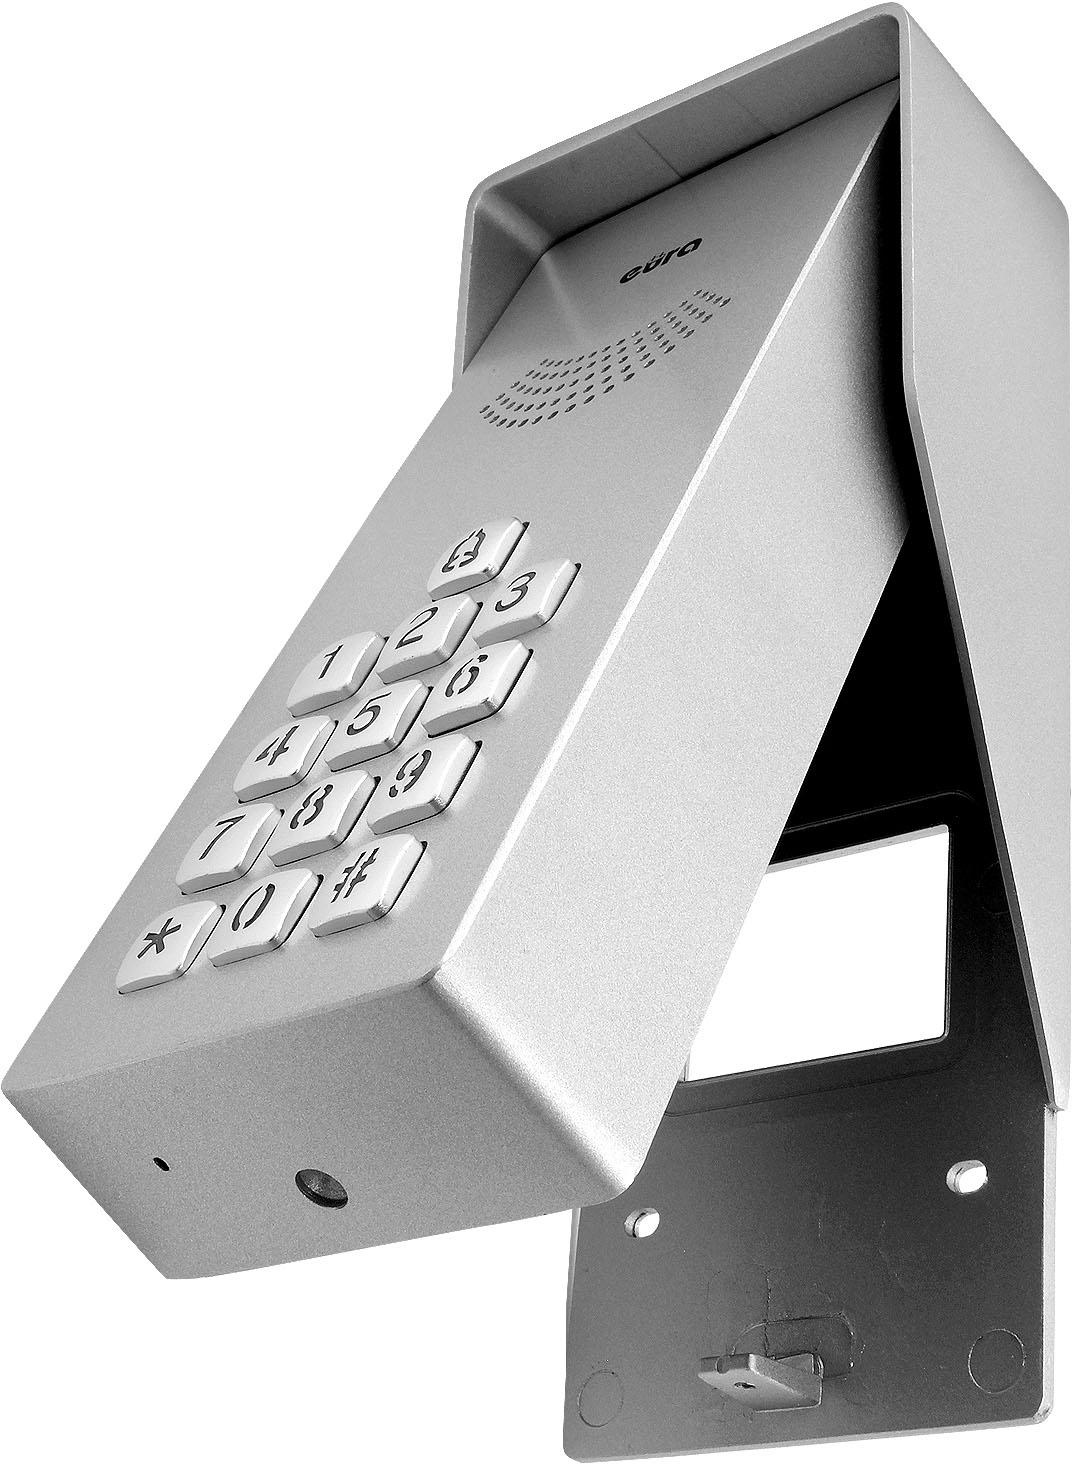 Kaseta zewnętrzna (bramofon) domofonu EURA ADP-38A3 ENTRA grafit: